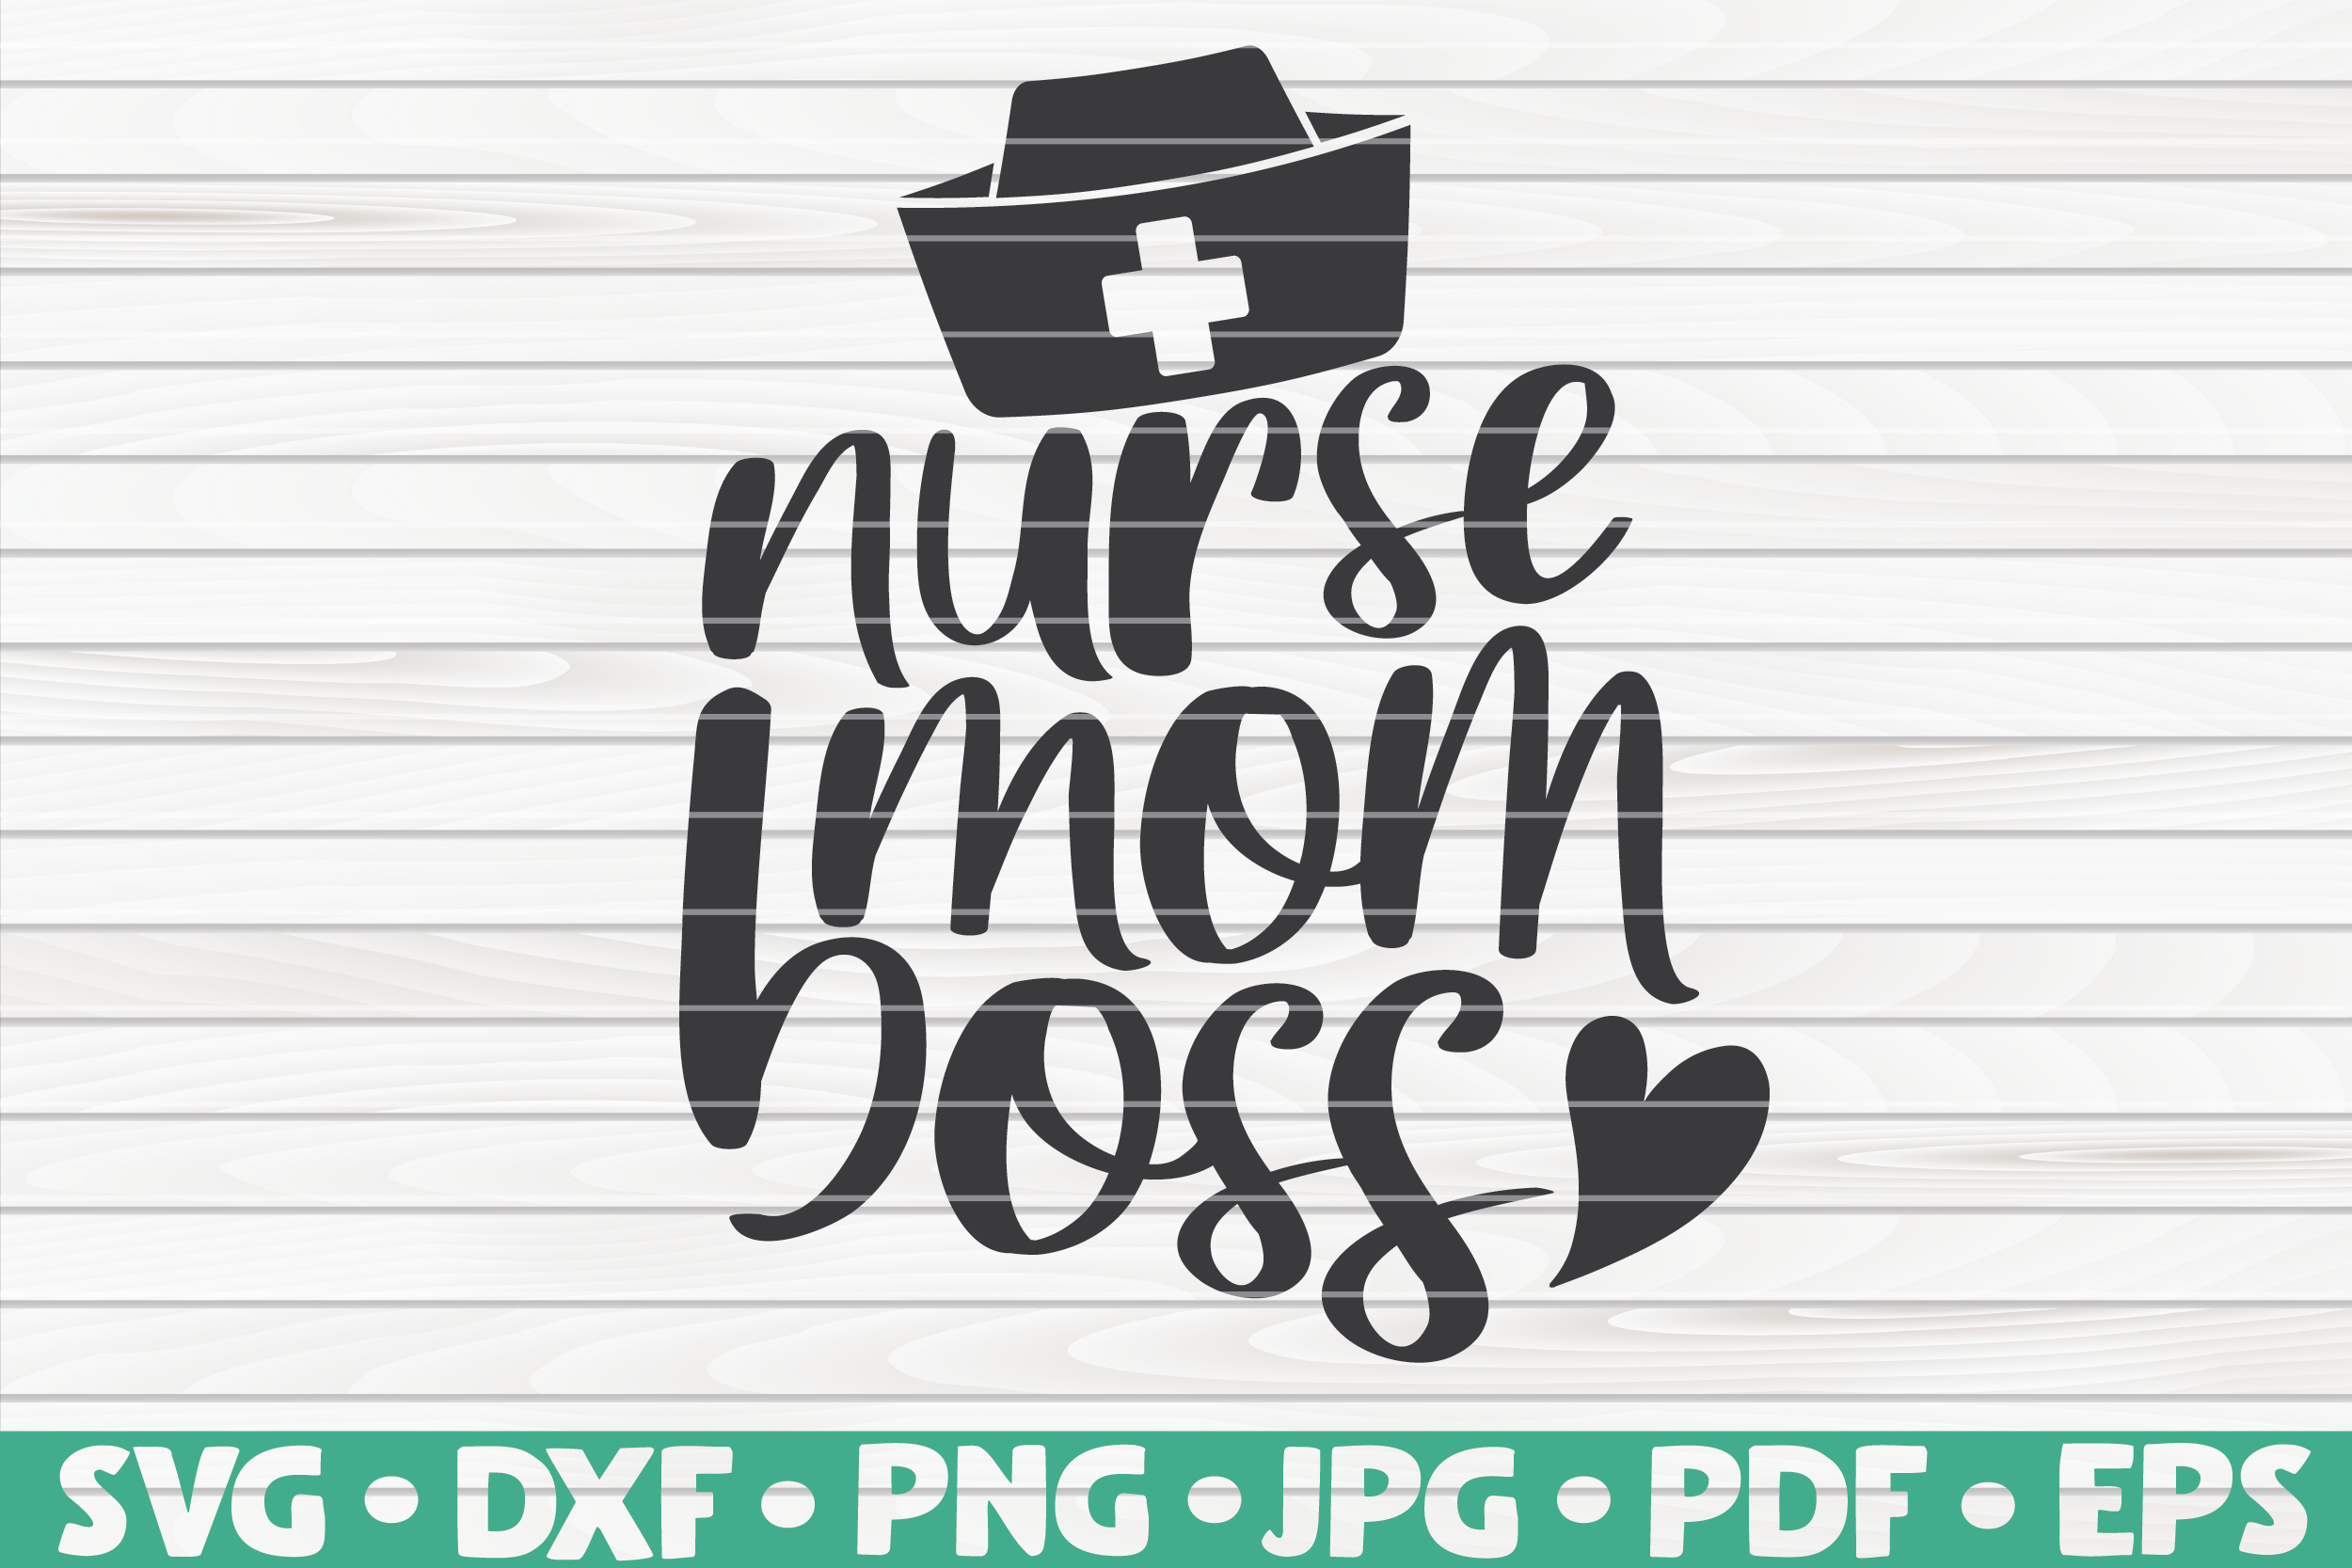 Download Nurse mom boss SVG | Nurse Life By HQDigitalArt | TheHungryJPEG.com